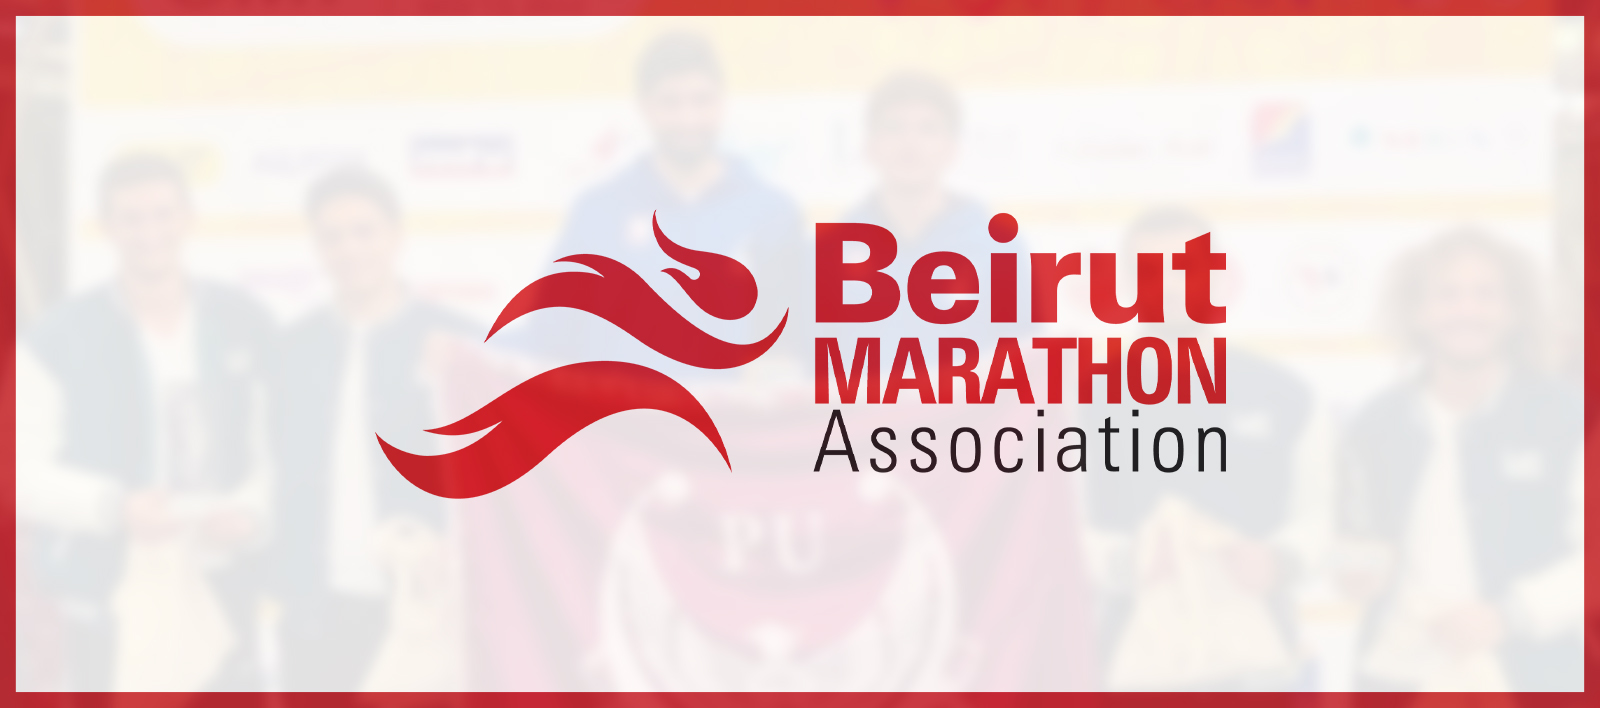 PU students won 1st place in Beirut marathon